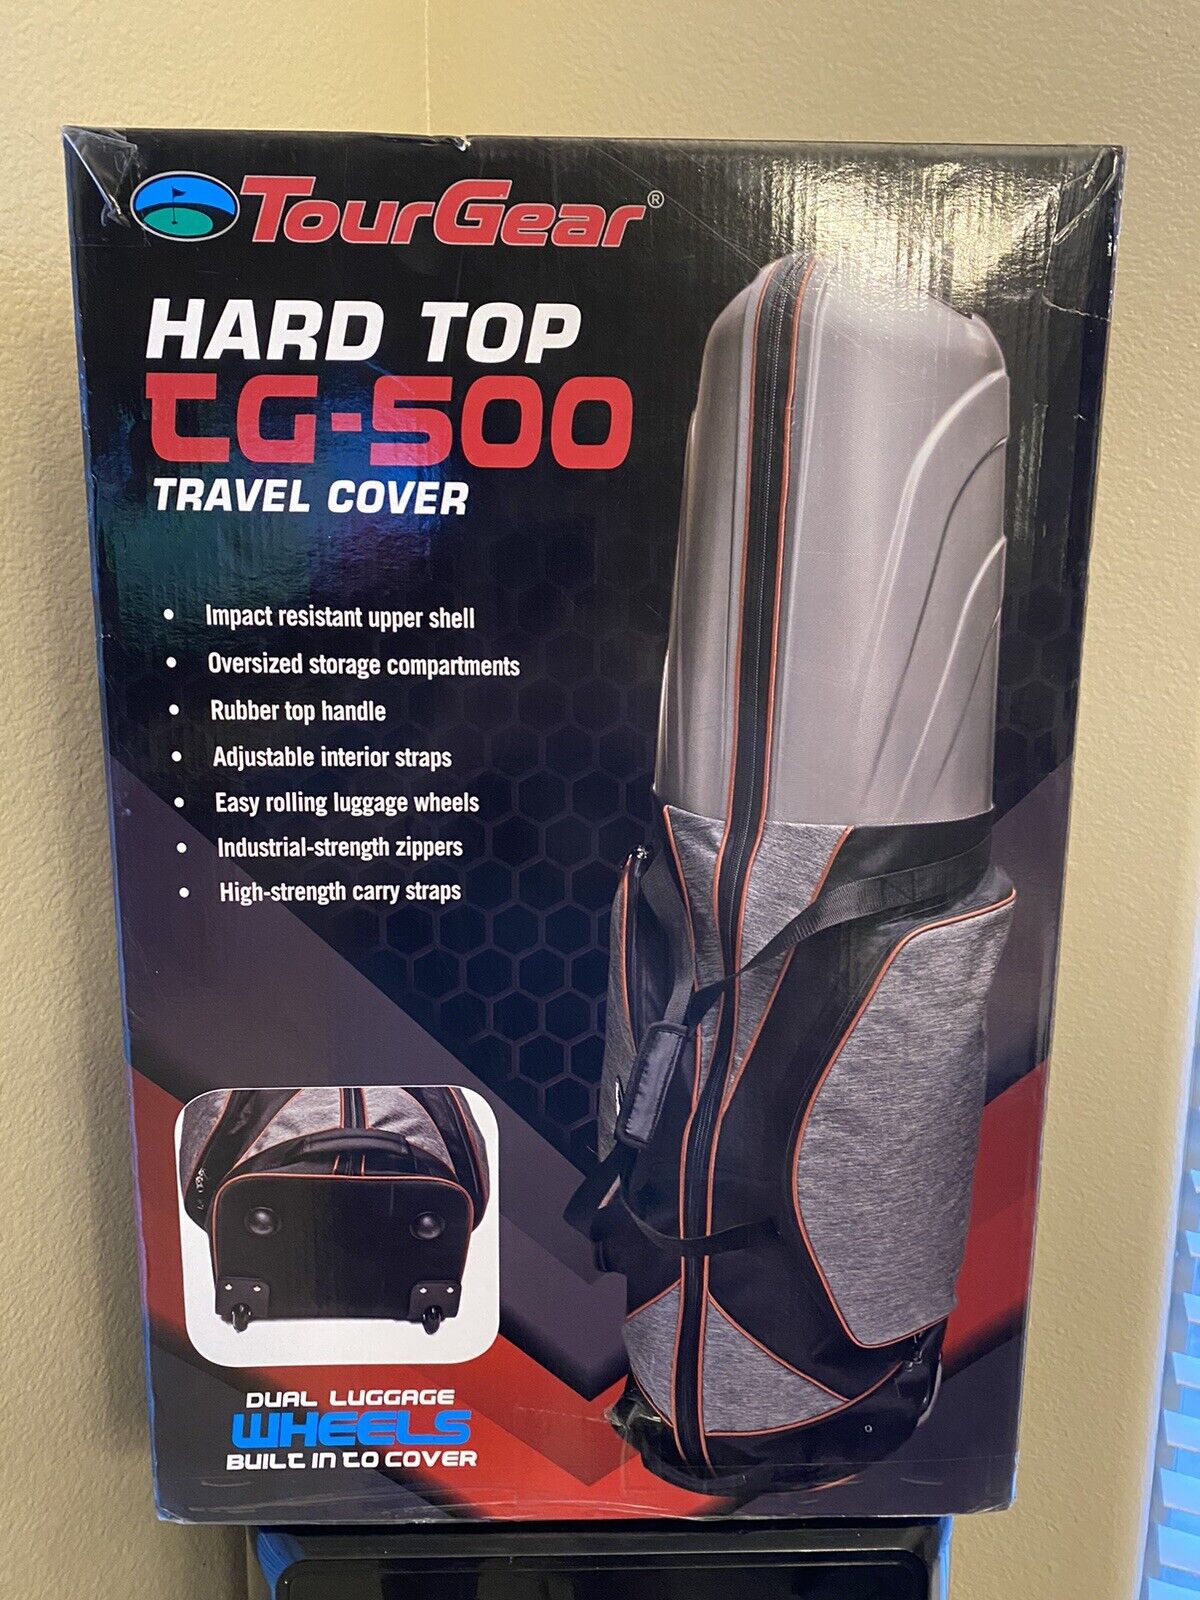 Golf Tour gear Hard top TG-500 Travel Cover